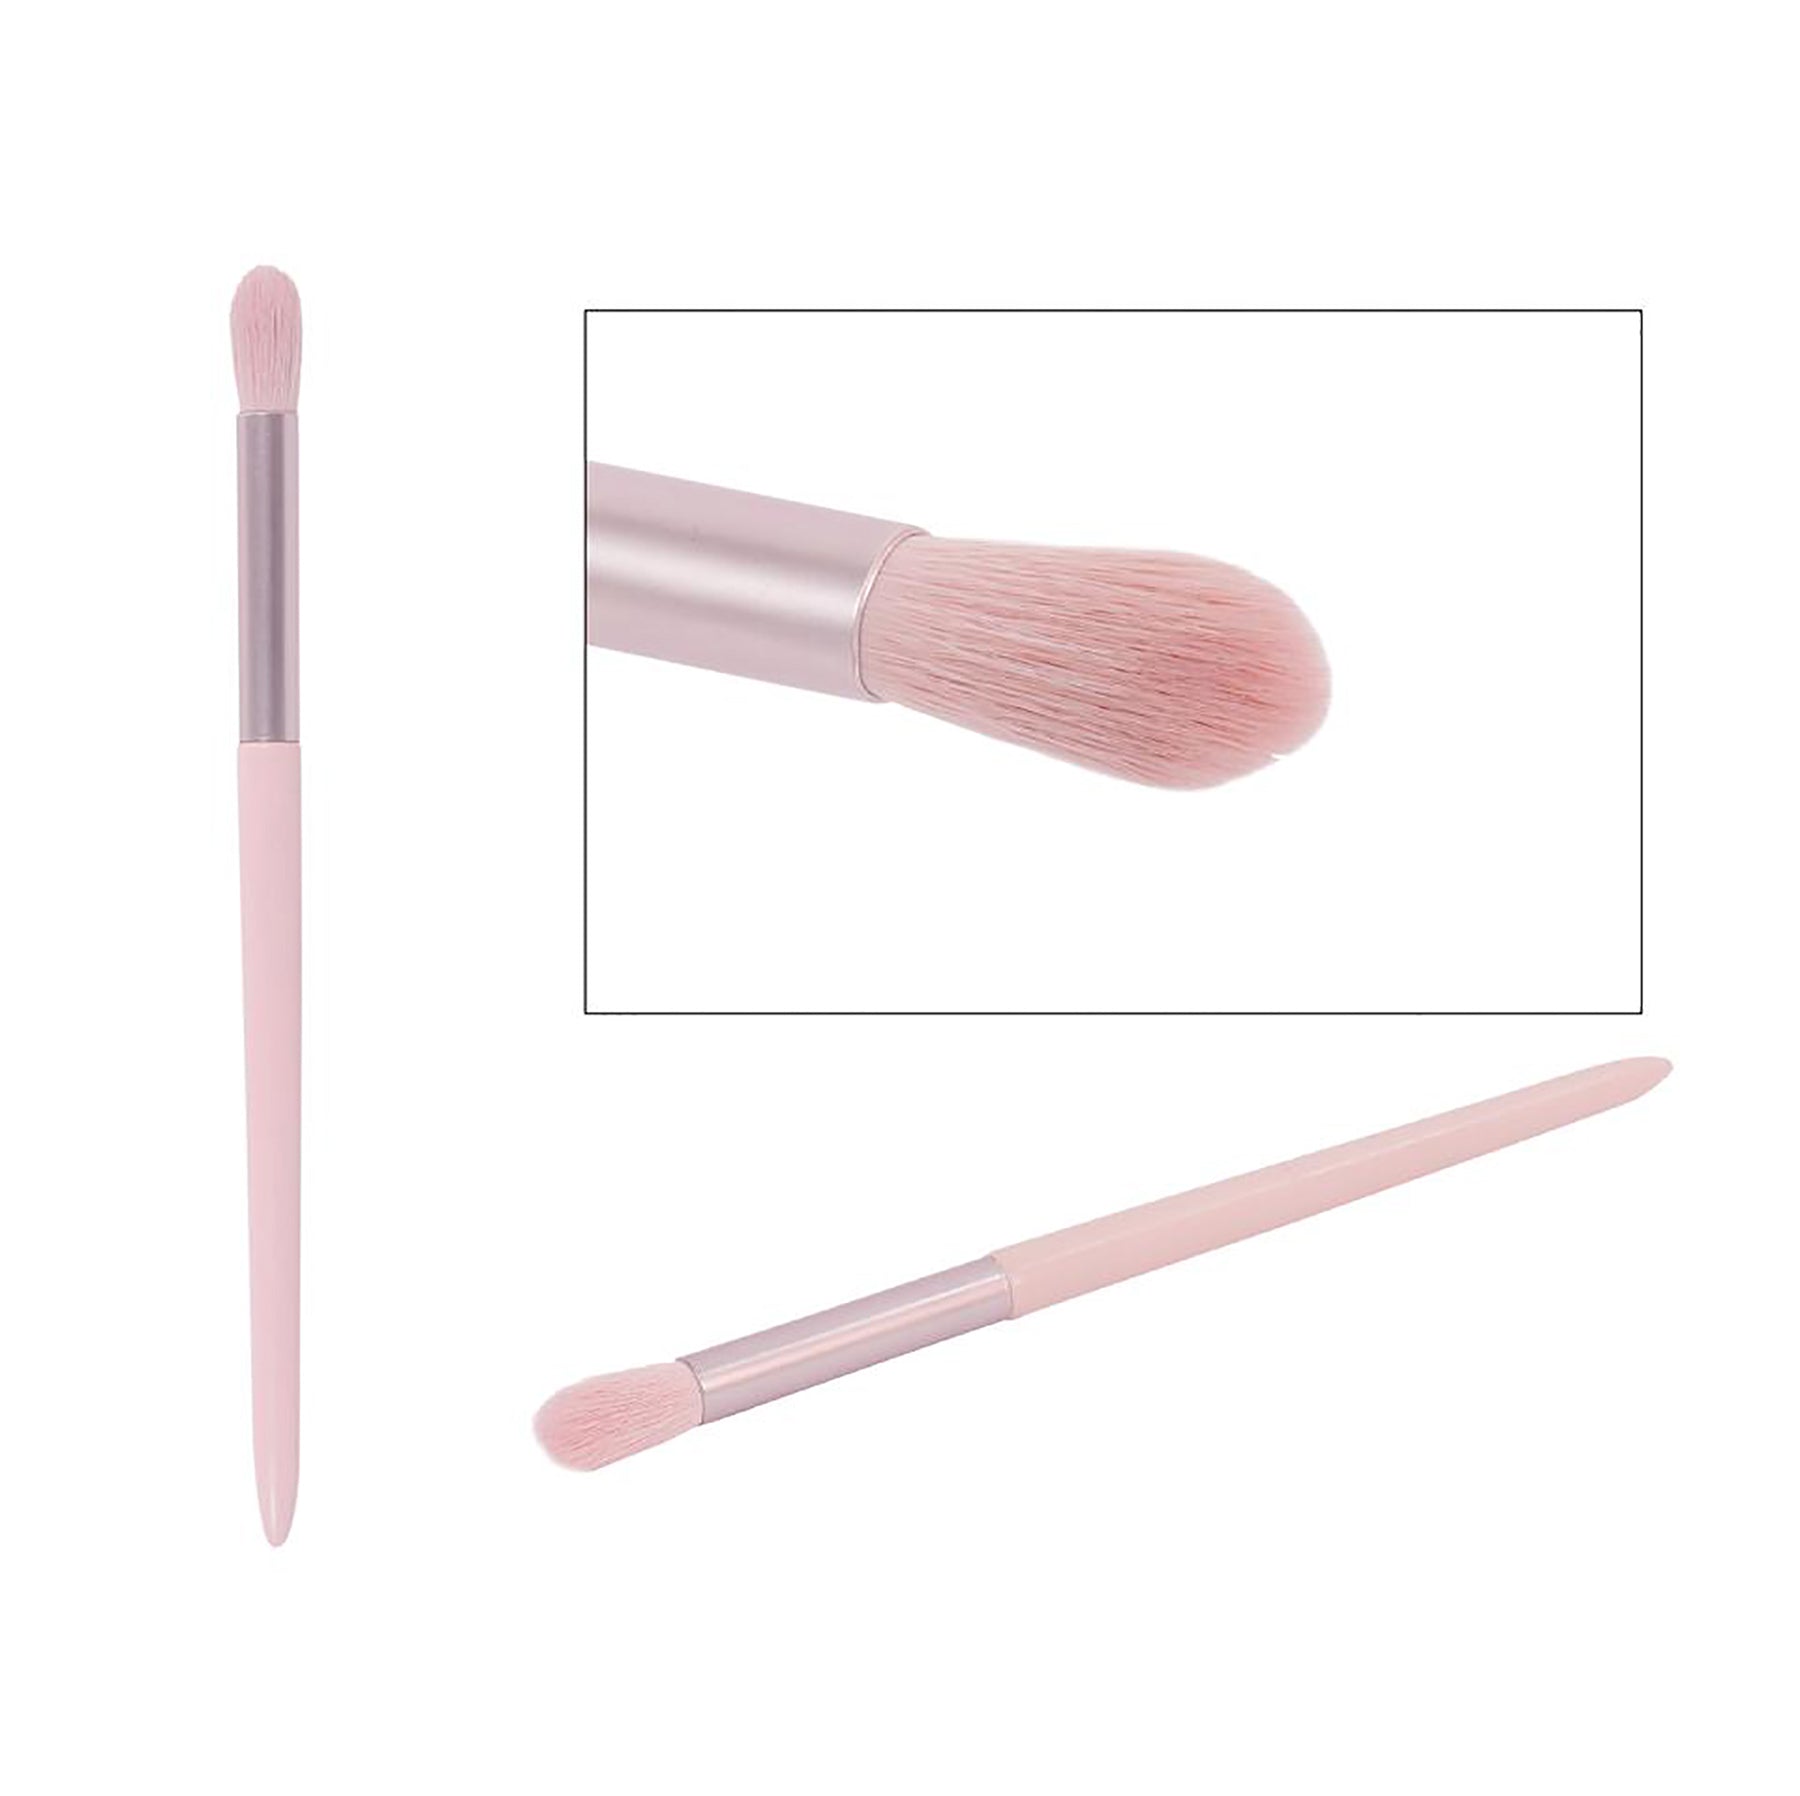 Bodico Shadow Blending Brush Pink-blush 6.25in Bristles 0.75in